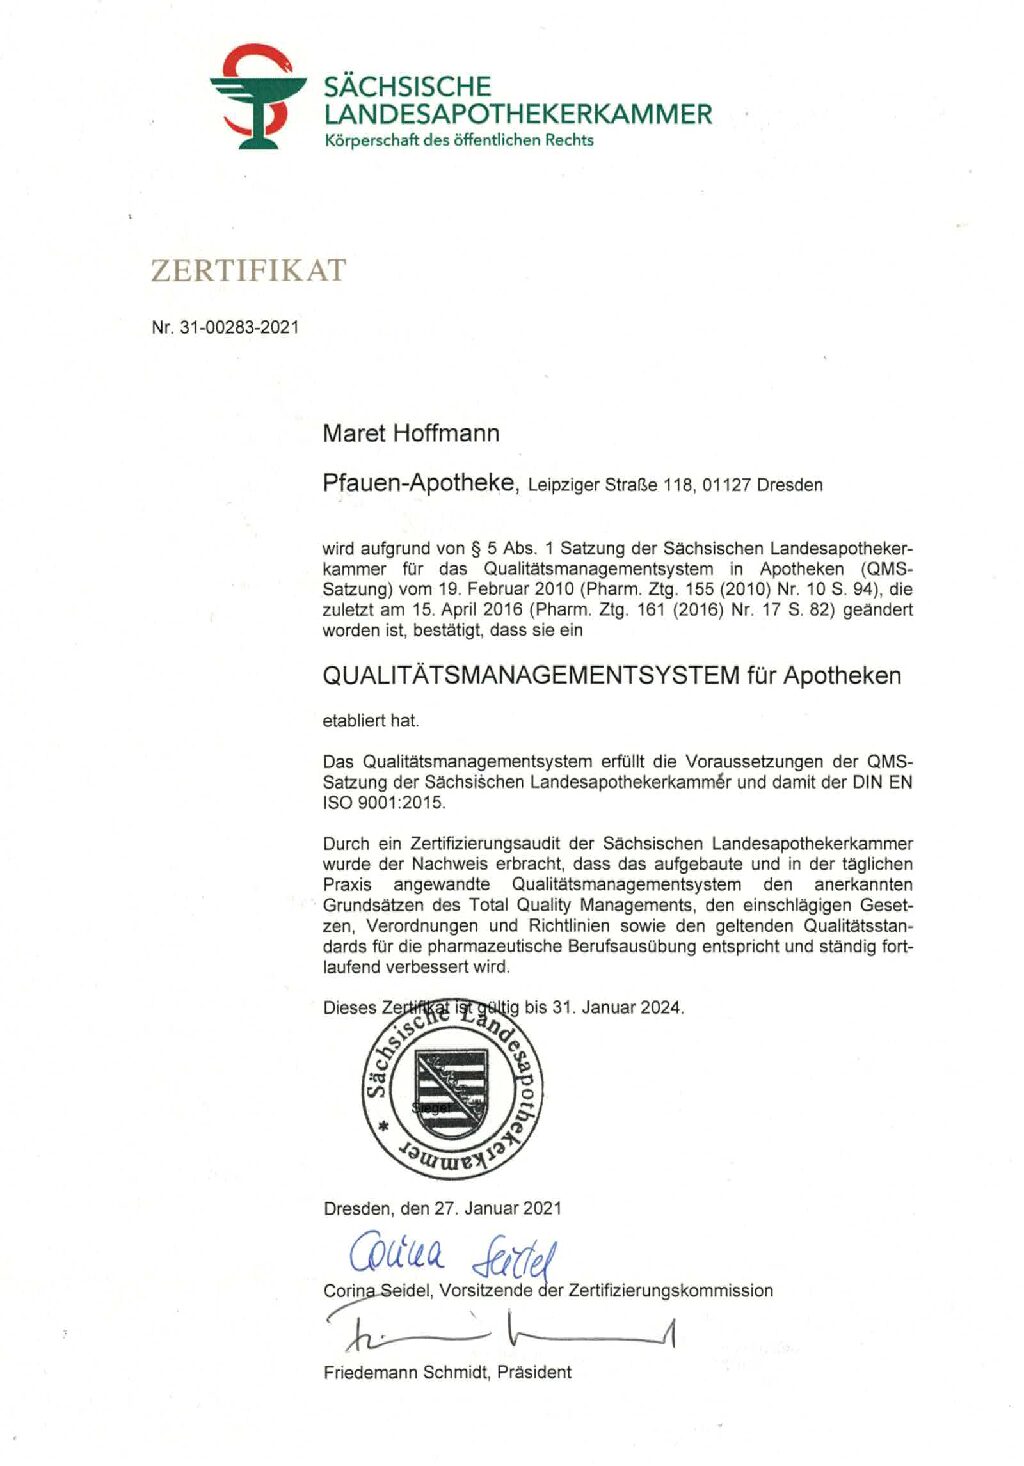 Zertifikat DIN ISO 9001:2015 Pfauen Apotheke